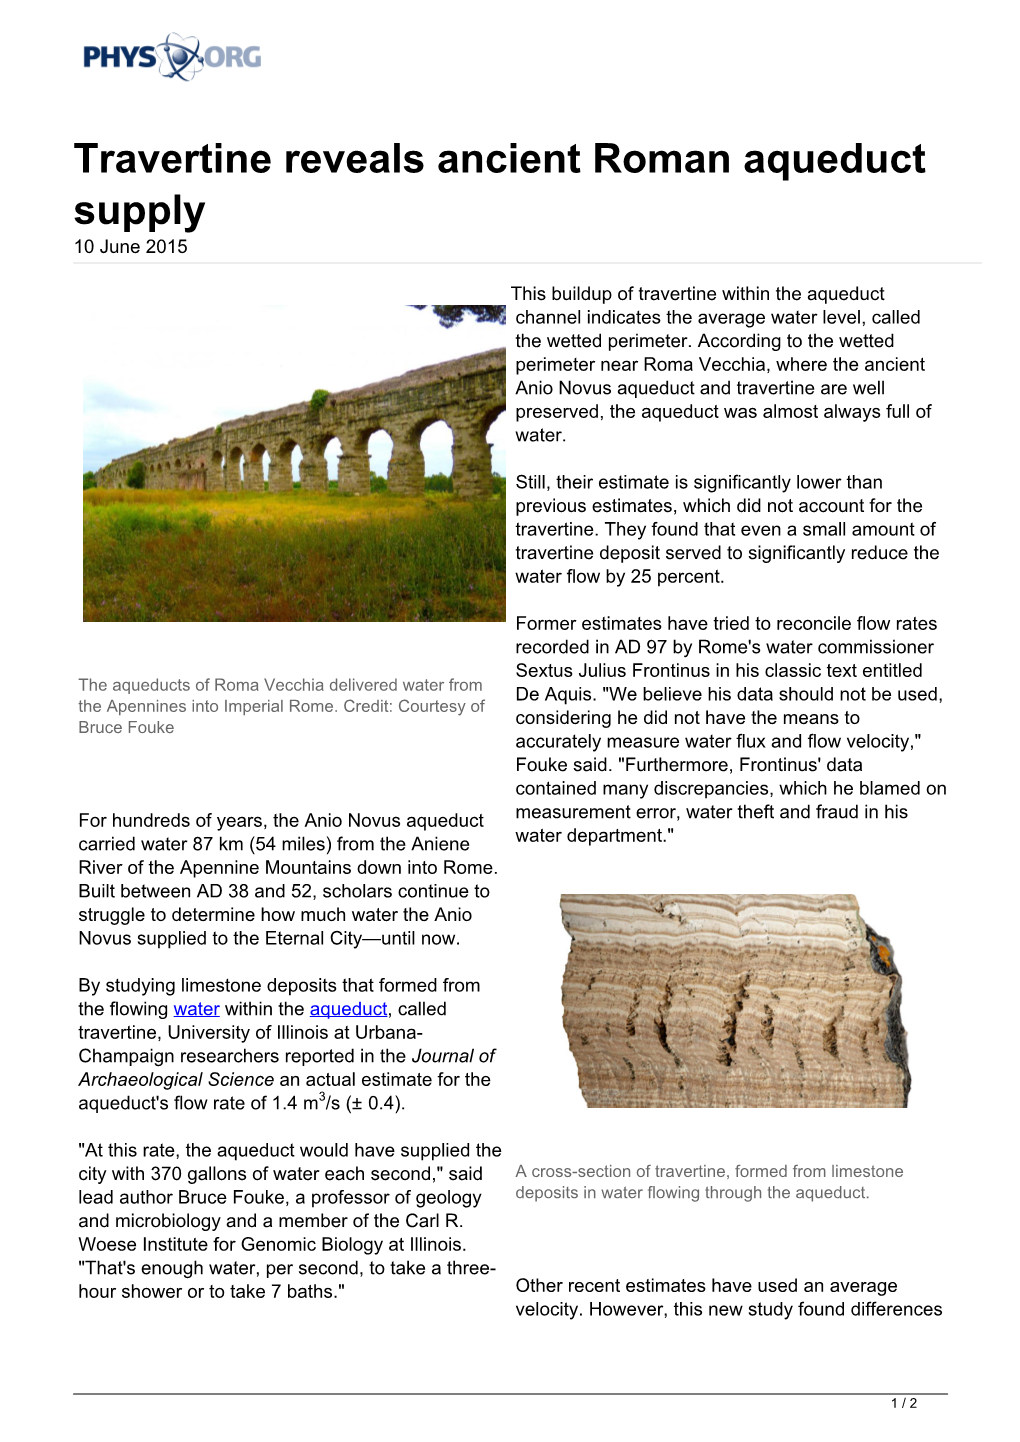 Travertine Reveals Ancient Roman Aqueduct Supply 10 June 2015